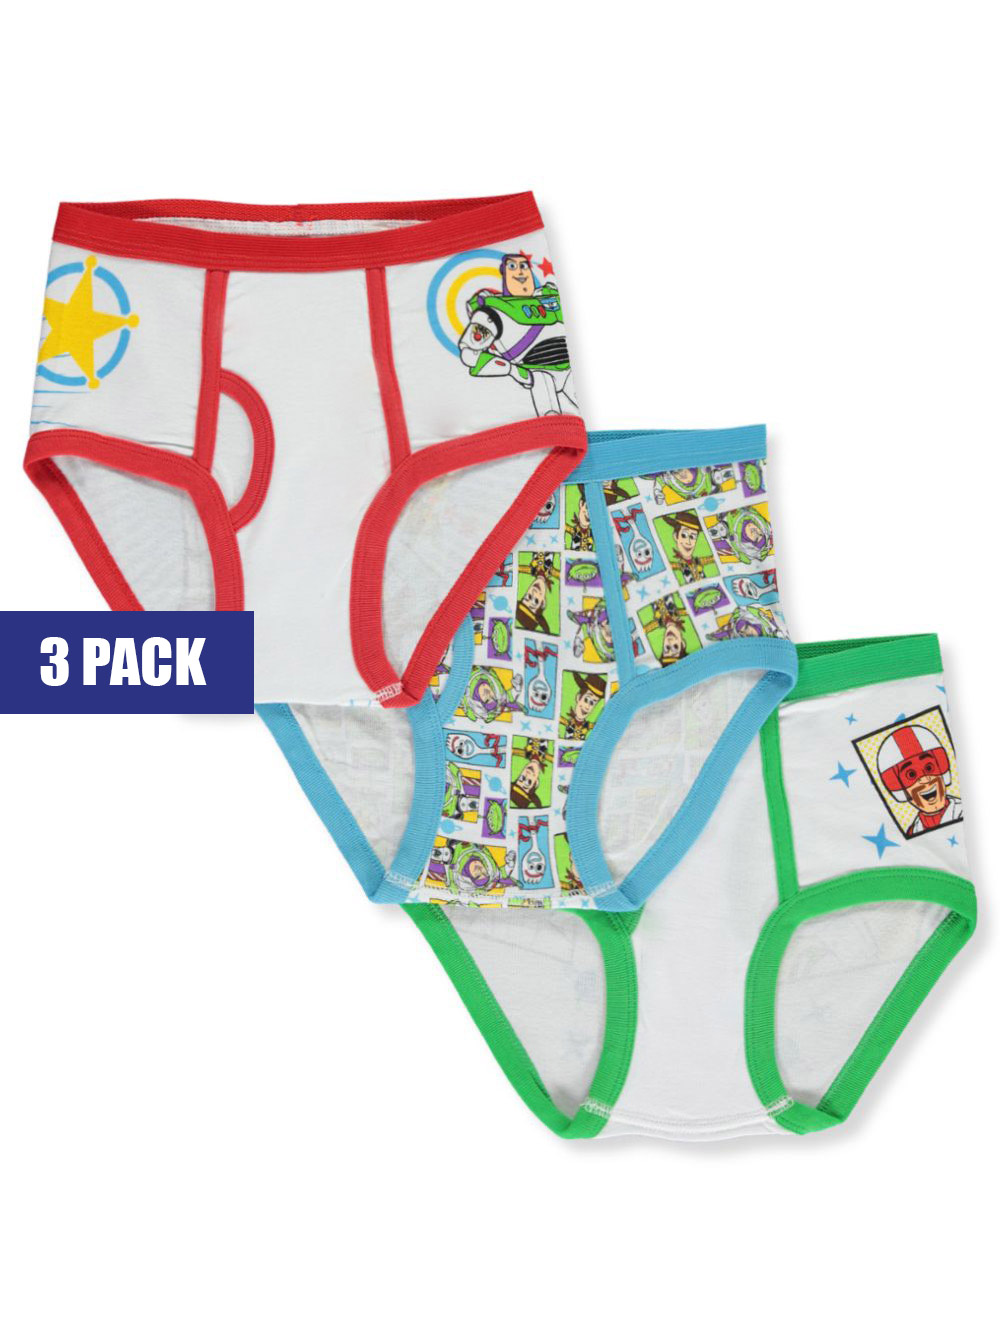 Toy Story Girls Panties Underwear - 8-Pack Toddler/Little Kid/Big Kid Size  Briefs 